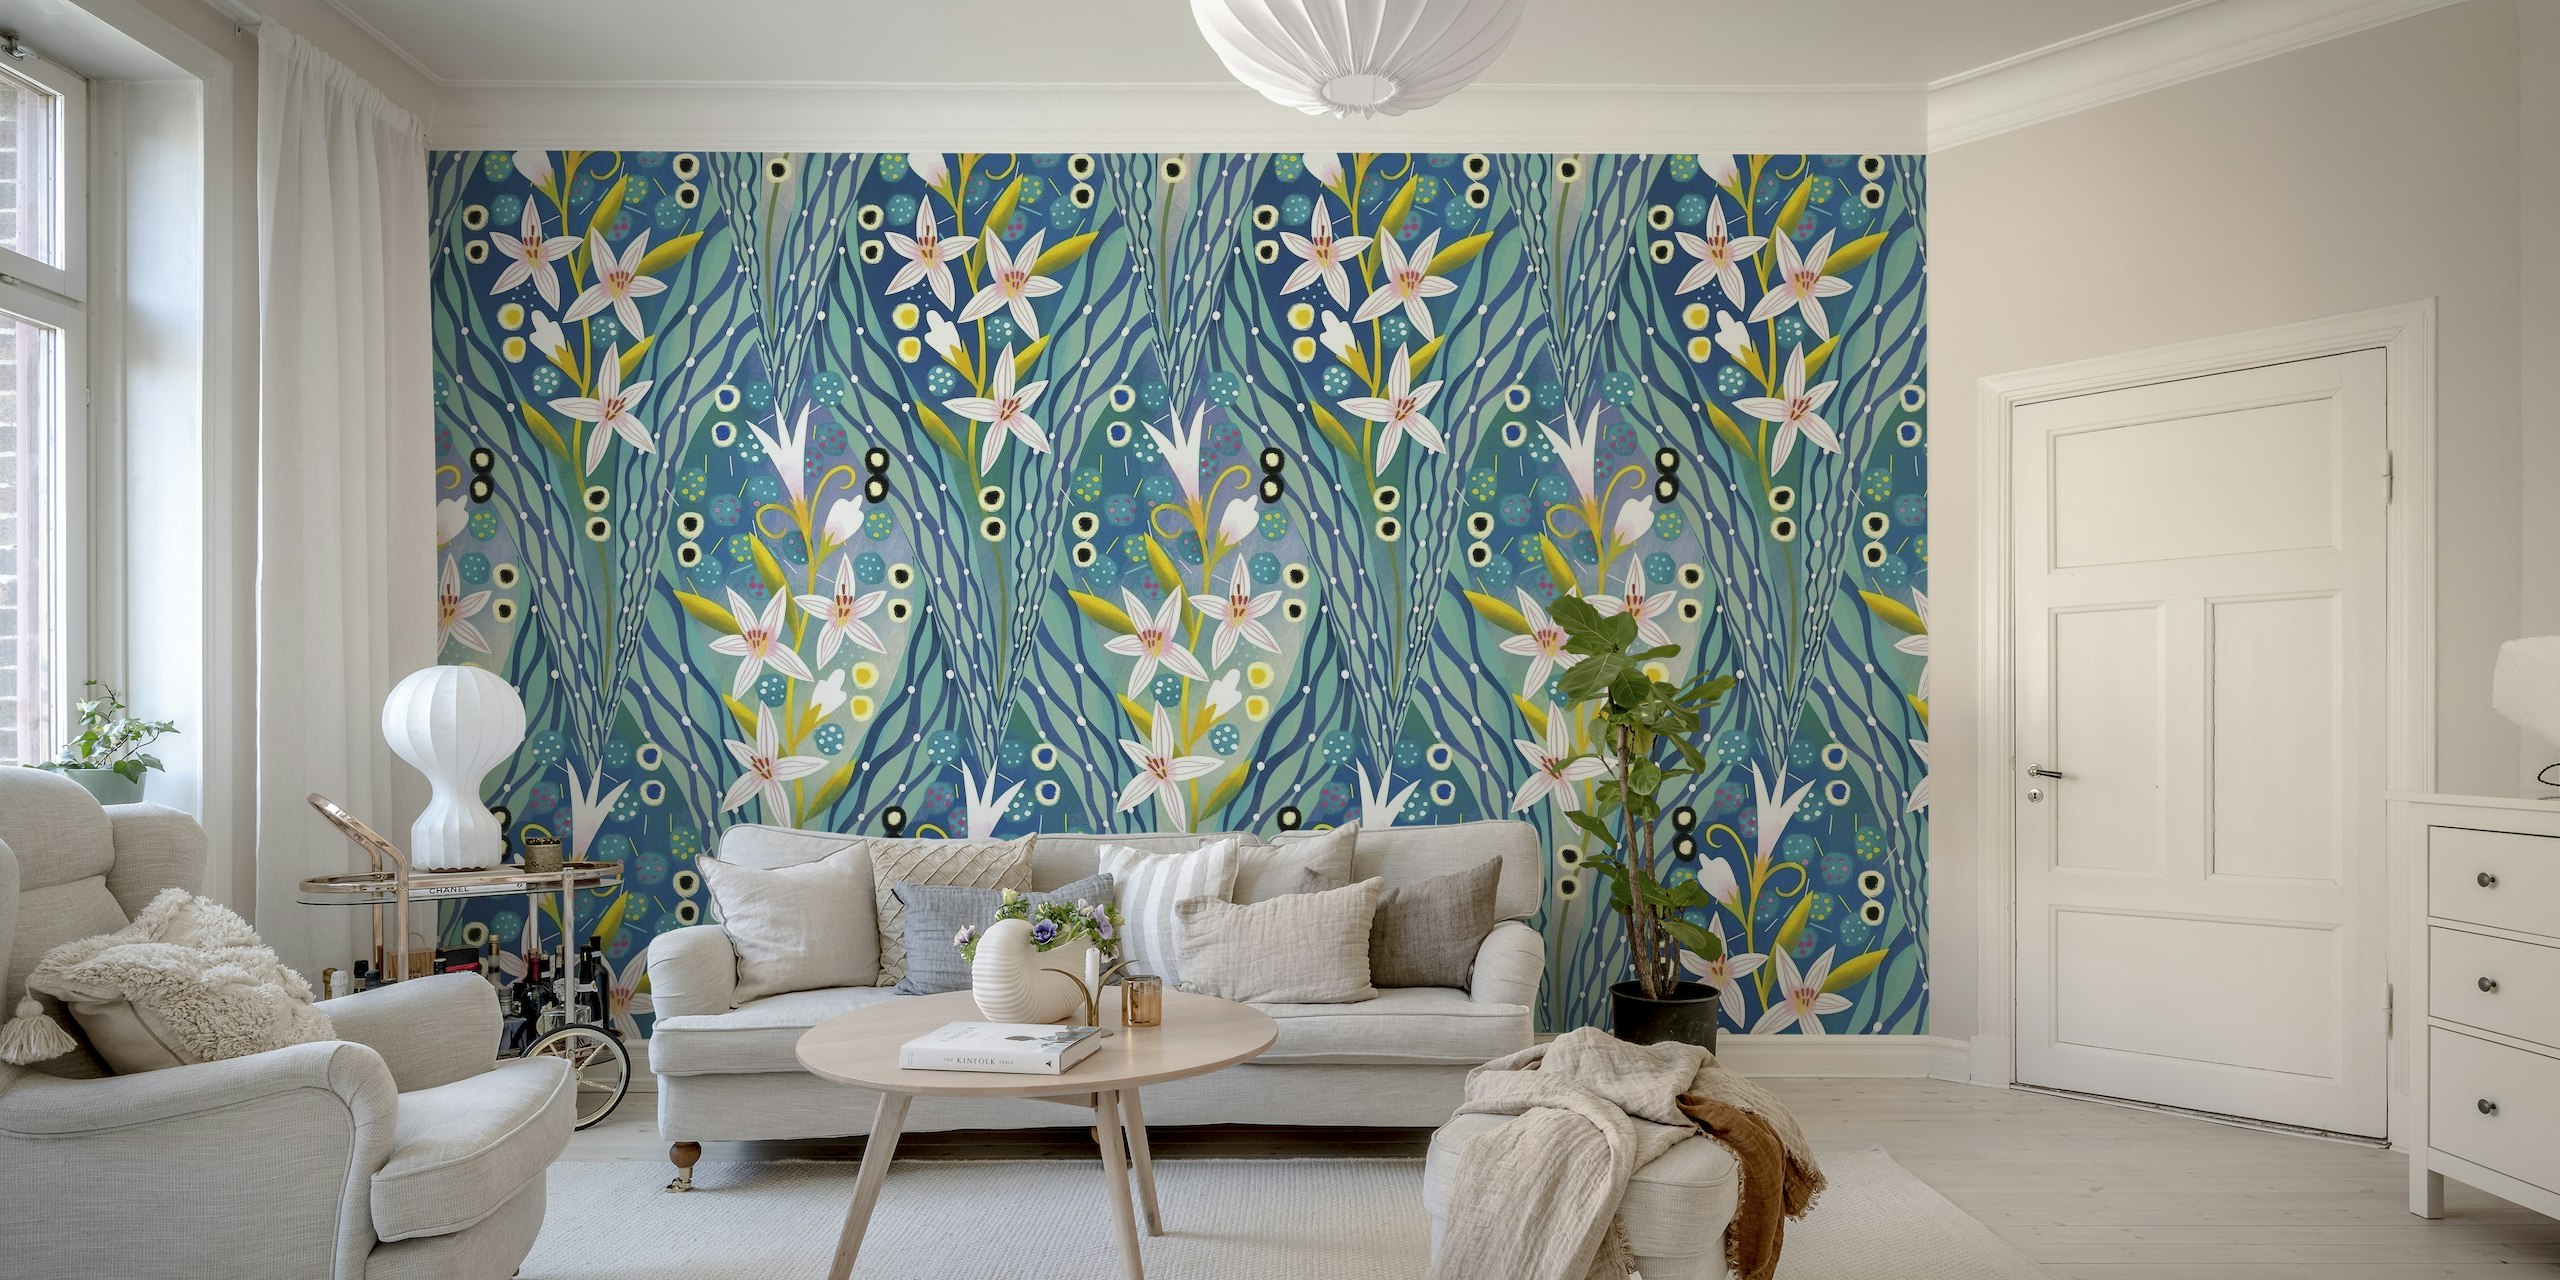 Art deco lilies wallpaper